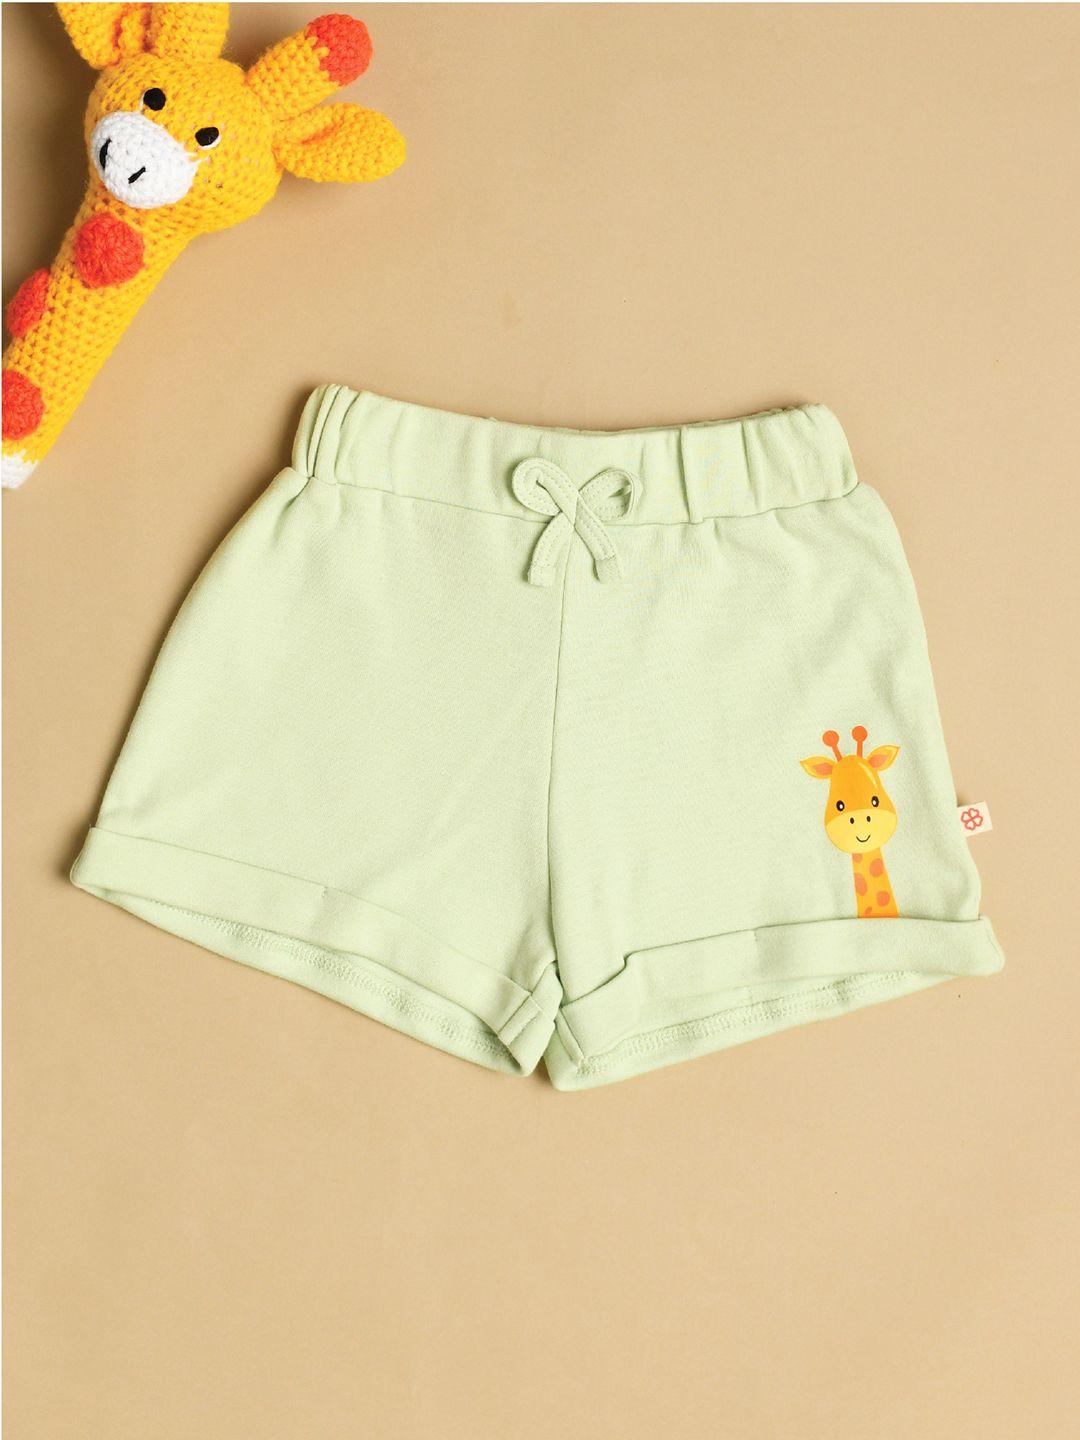 greendigo unisex kids green shorts